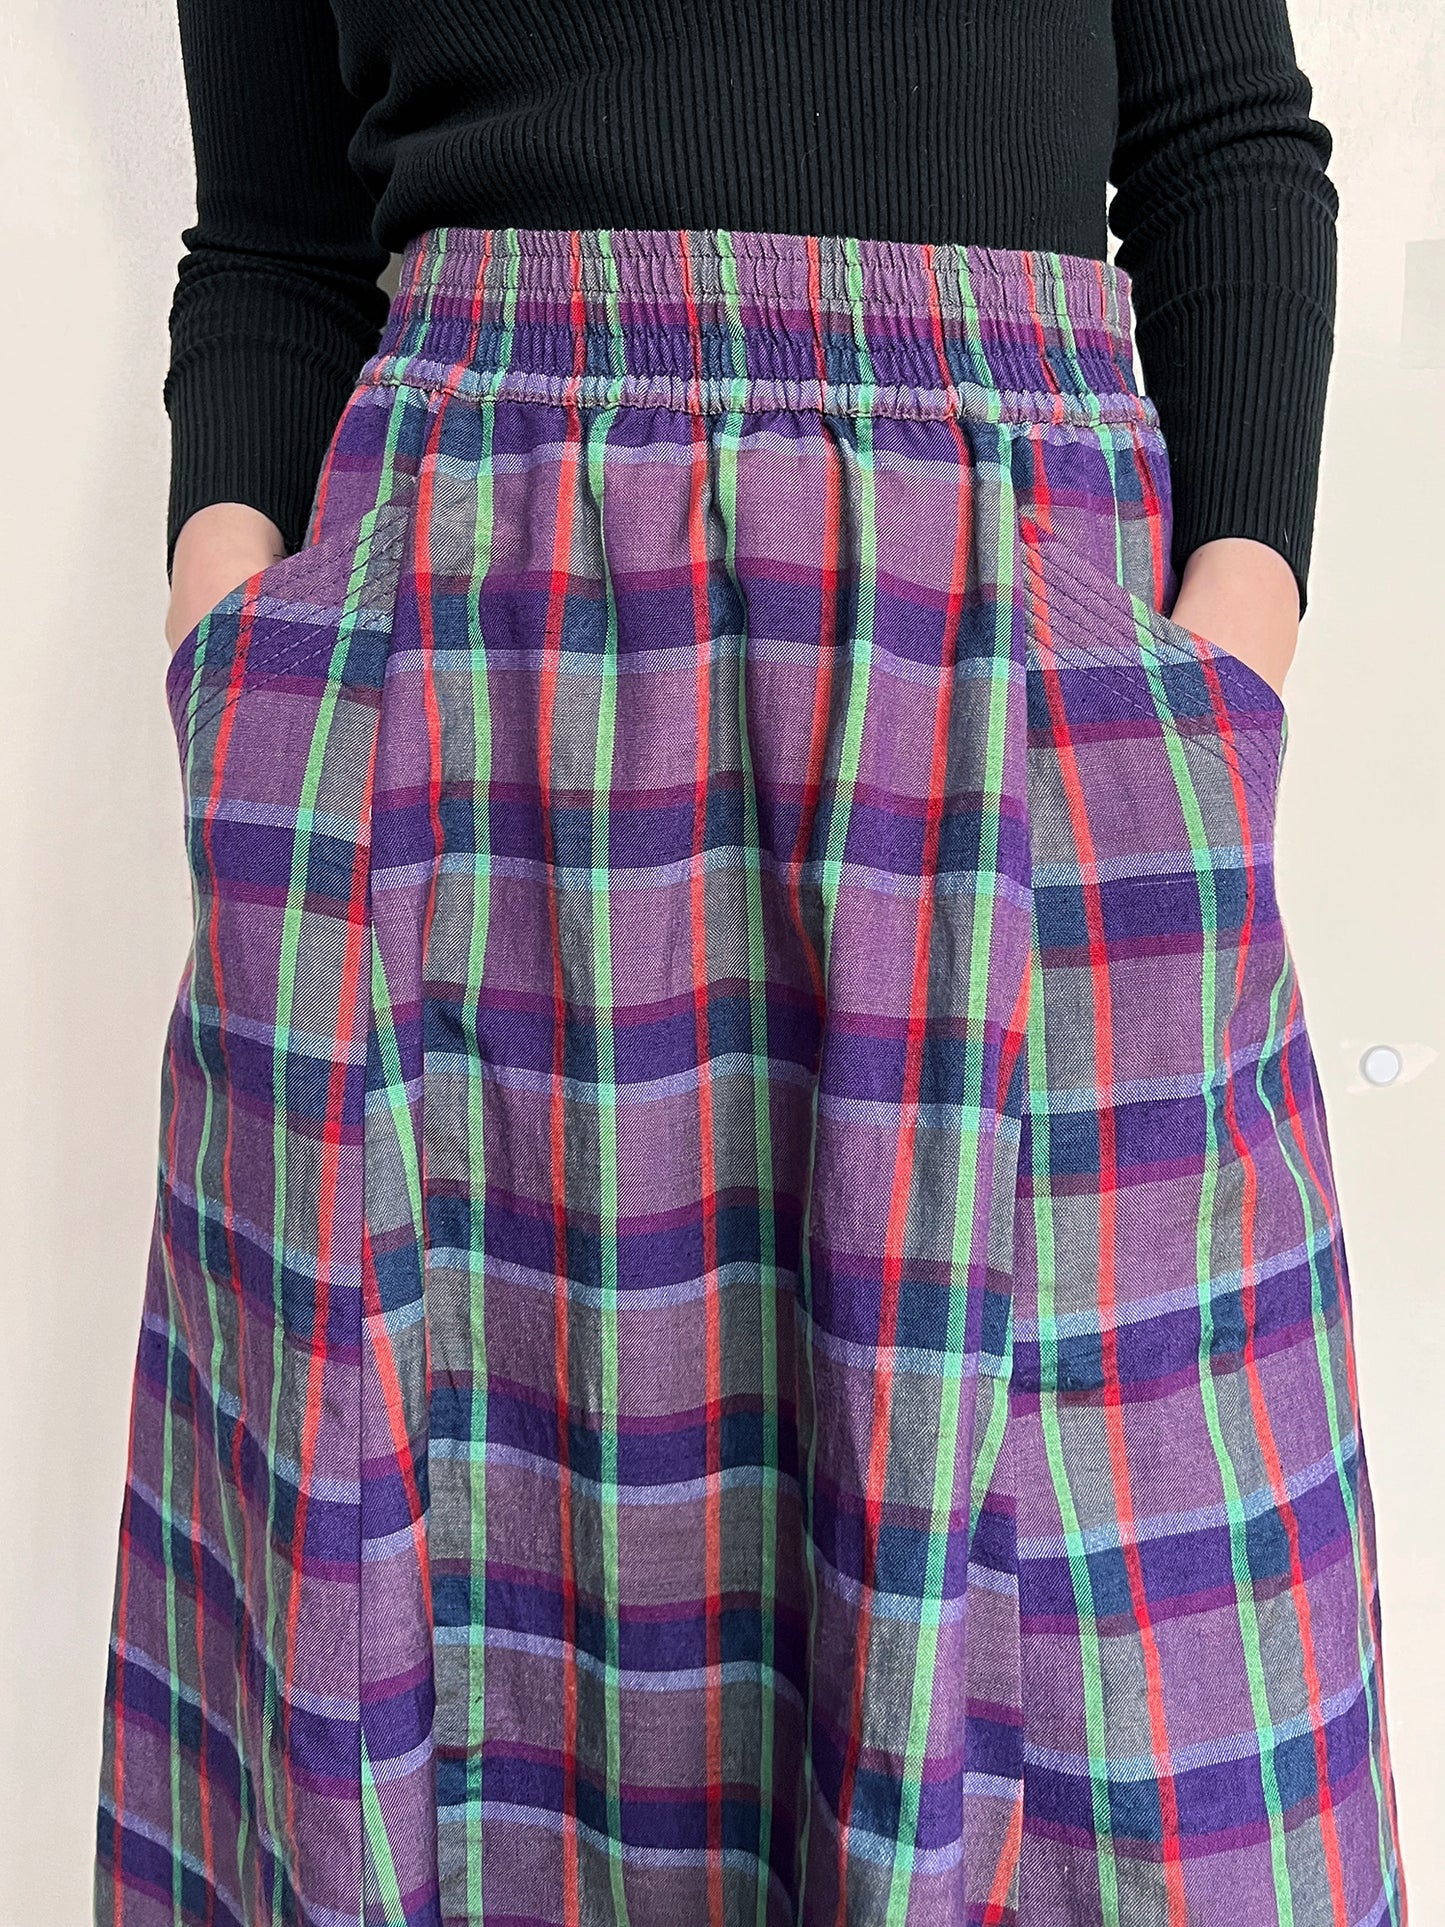 Grapevine Skirt / Last size S